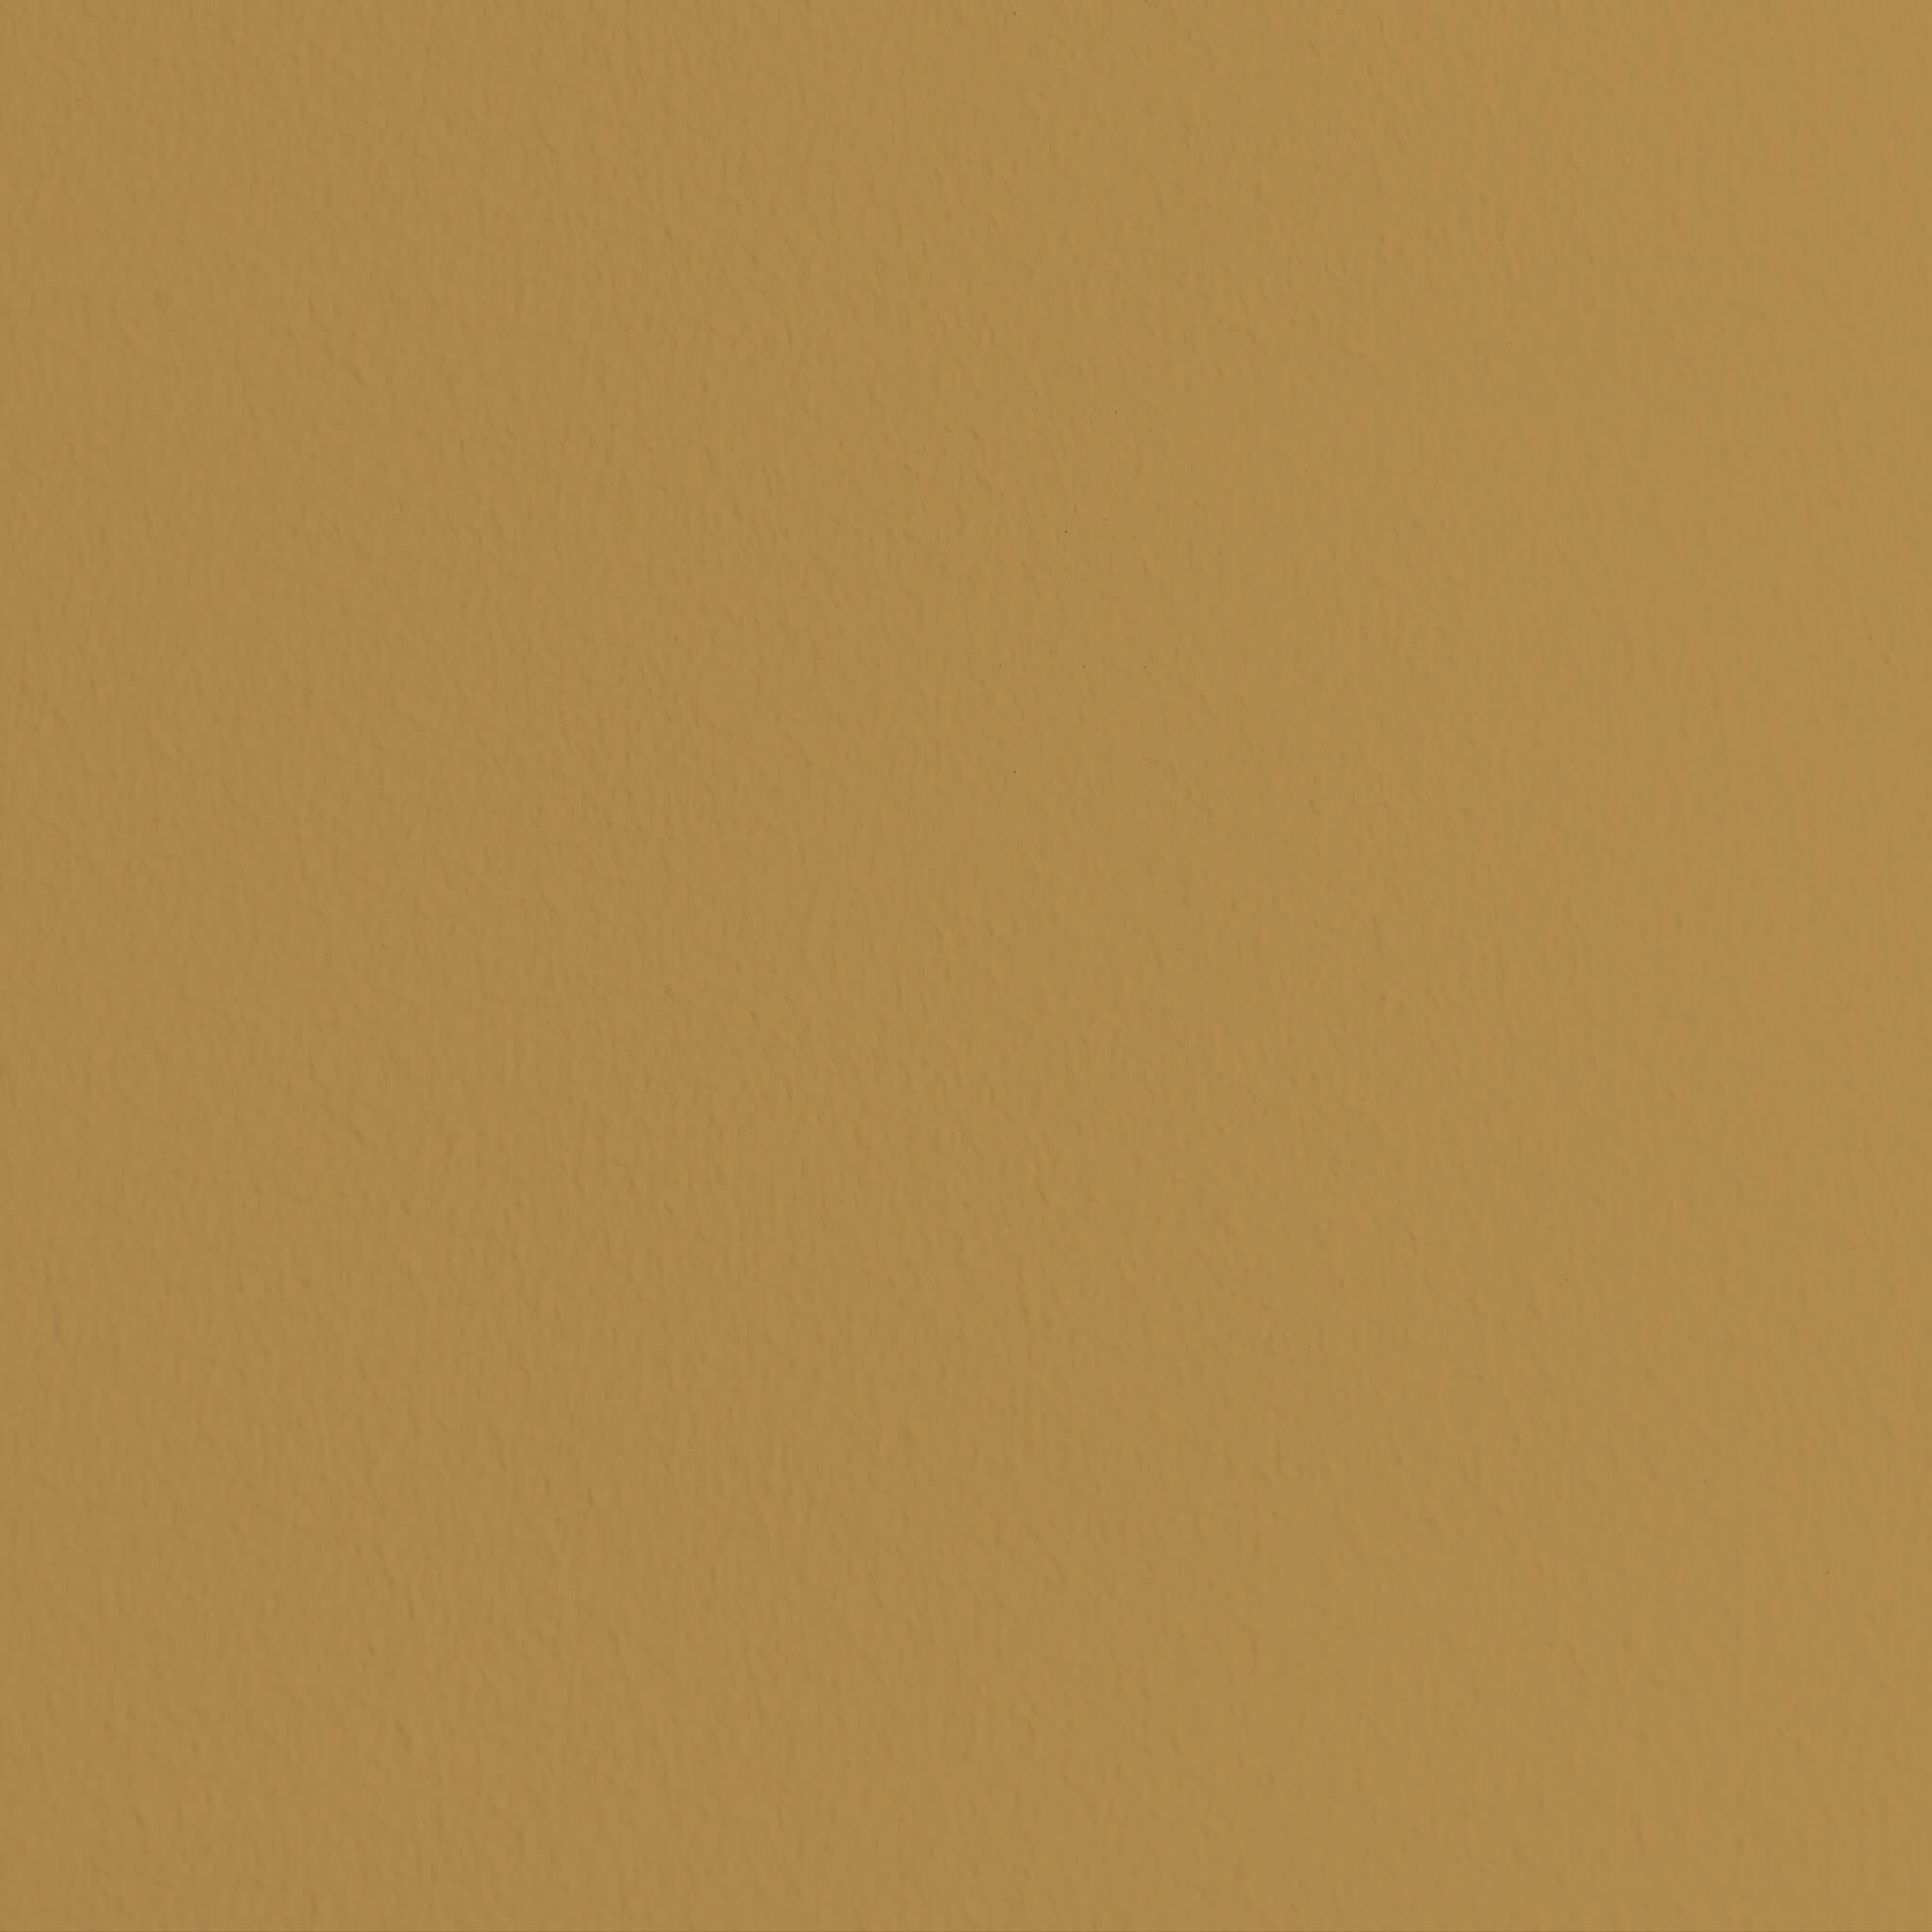 Mylands Freegrove Mustard - Marble Matt Emulsion / Wandfarbe, 1L